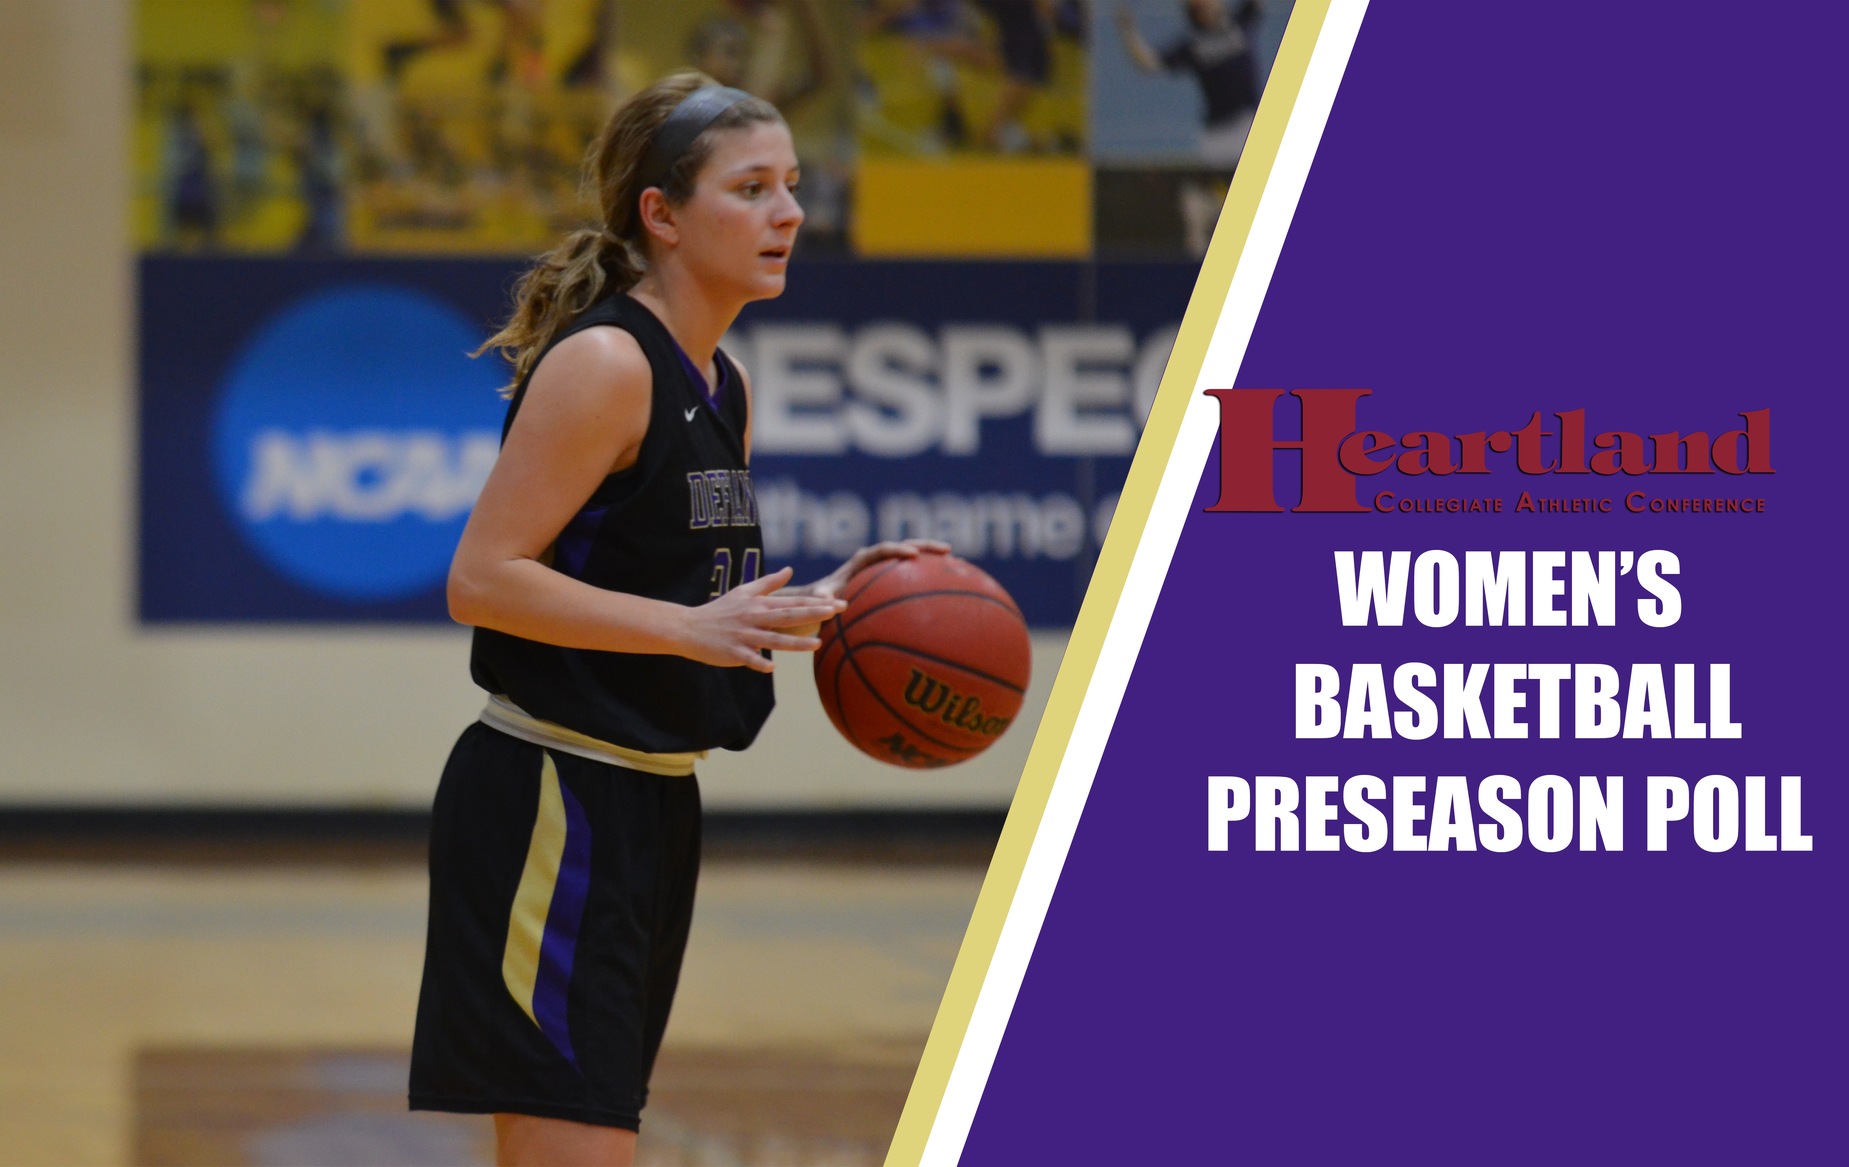 HCAC Announces Women's Basketball Preseason Poll